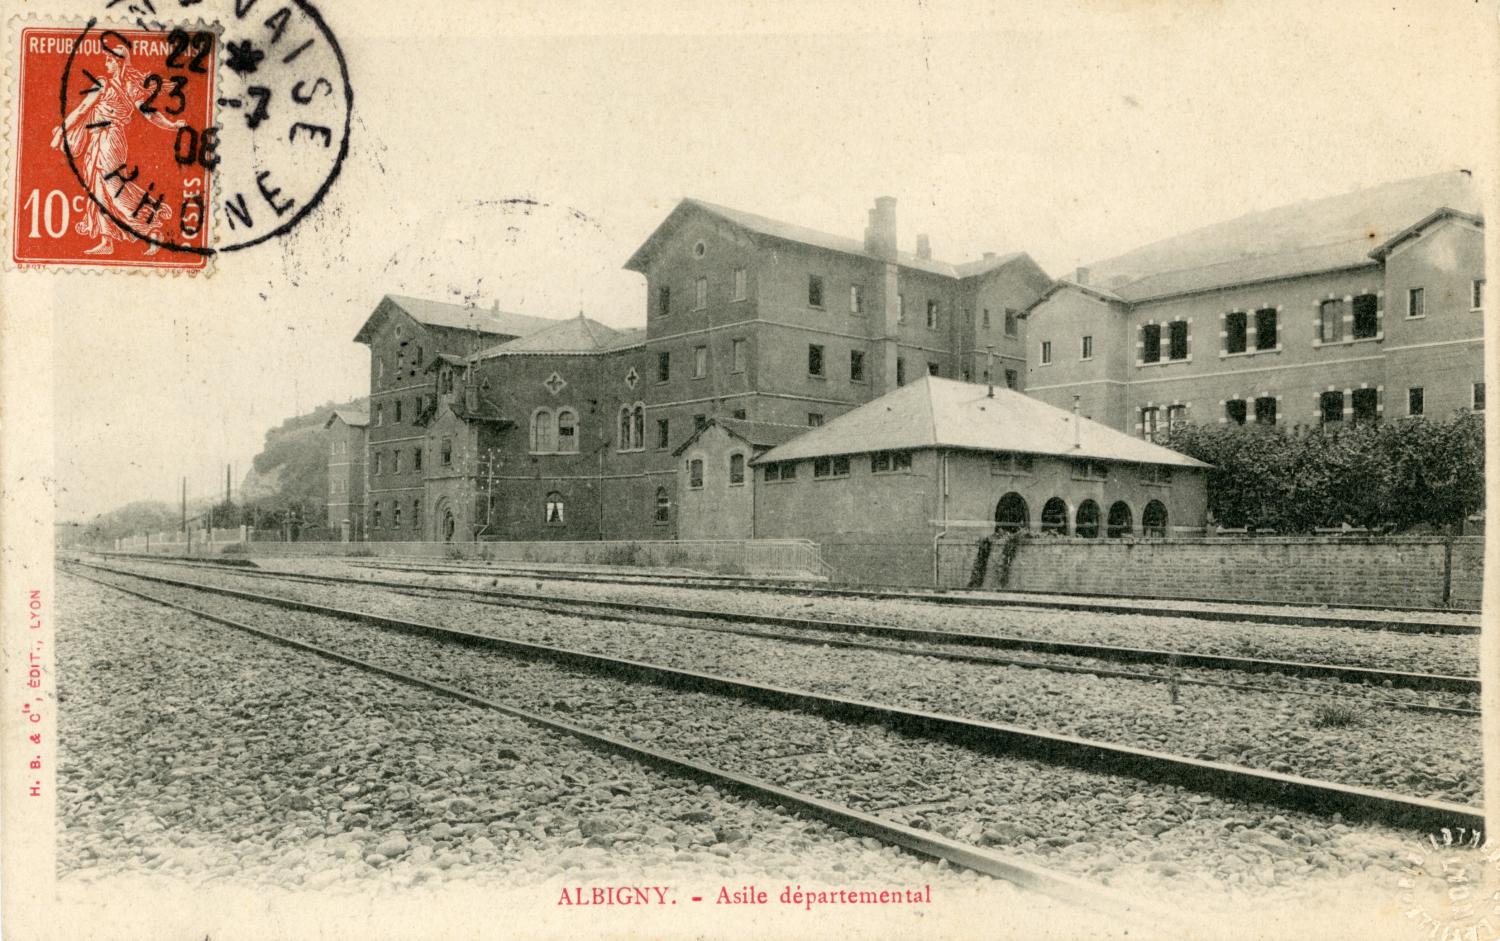 Albigny (Rhône). - Asile départemental